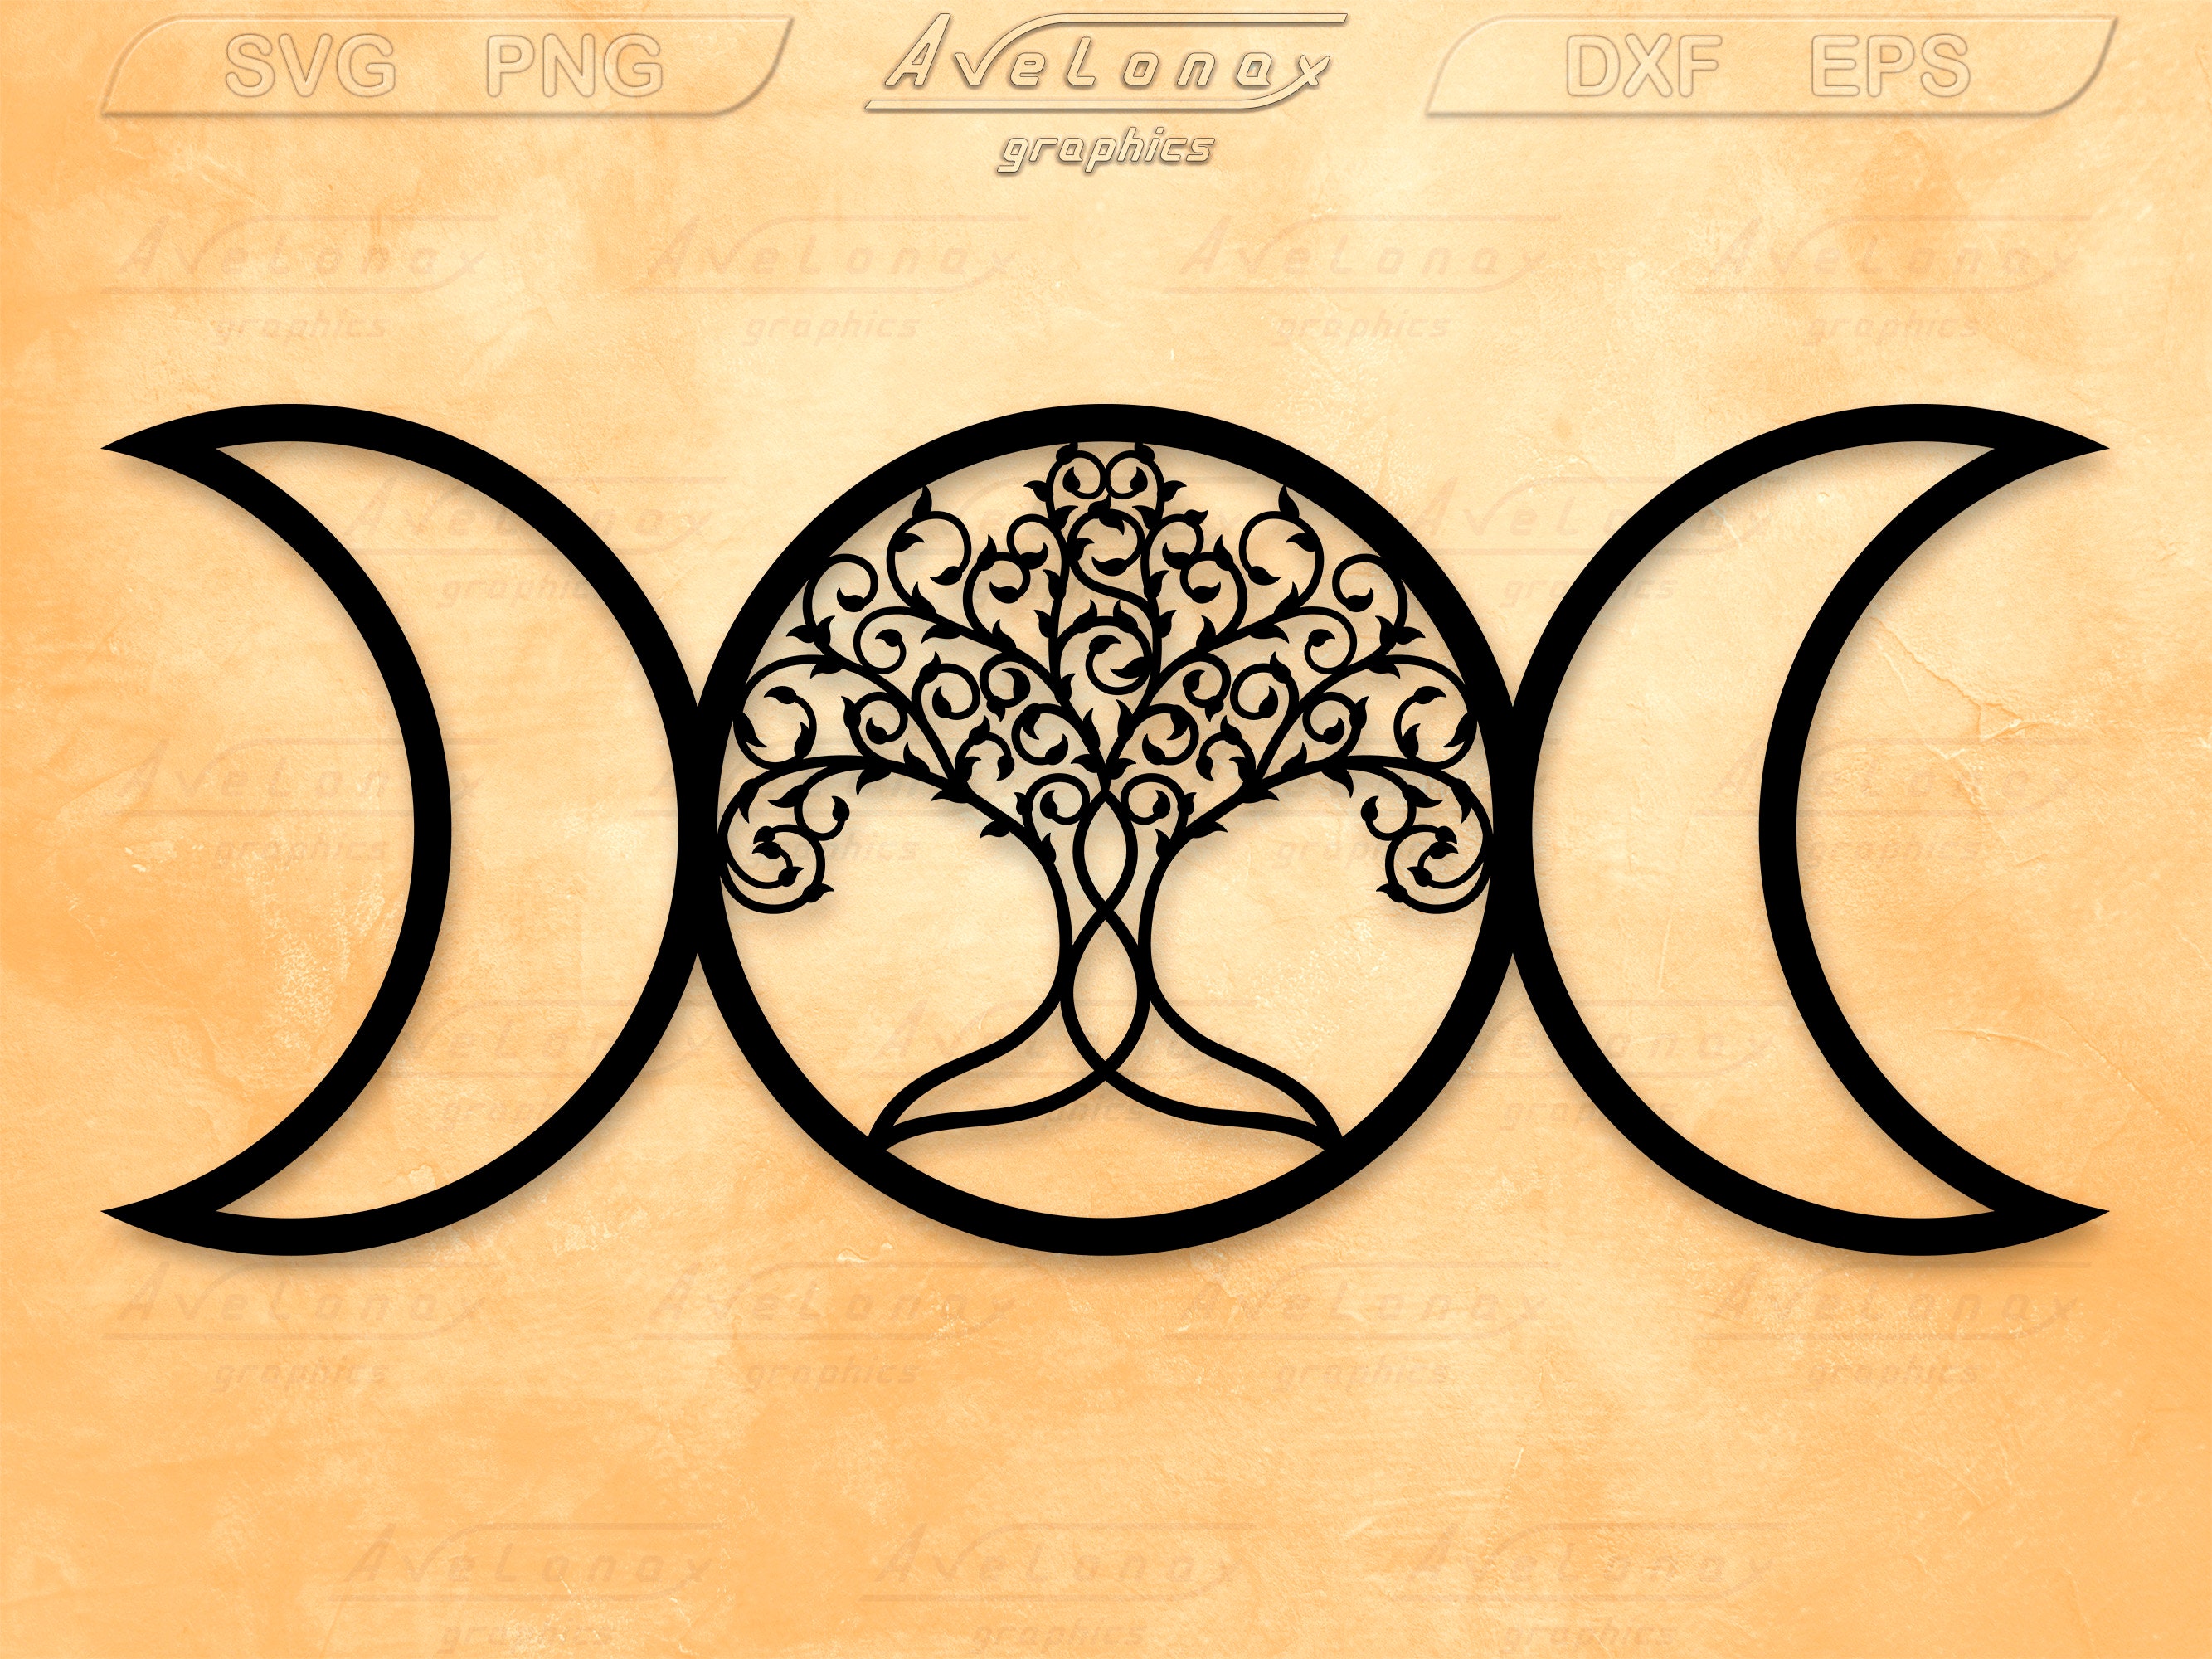 3. Wiccan Triple Moon Symbol Tattoo - wide 9